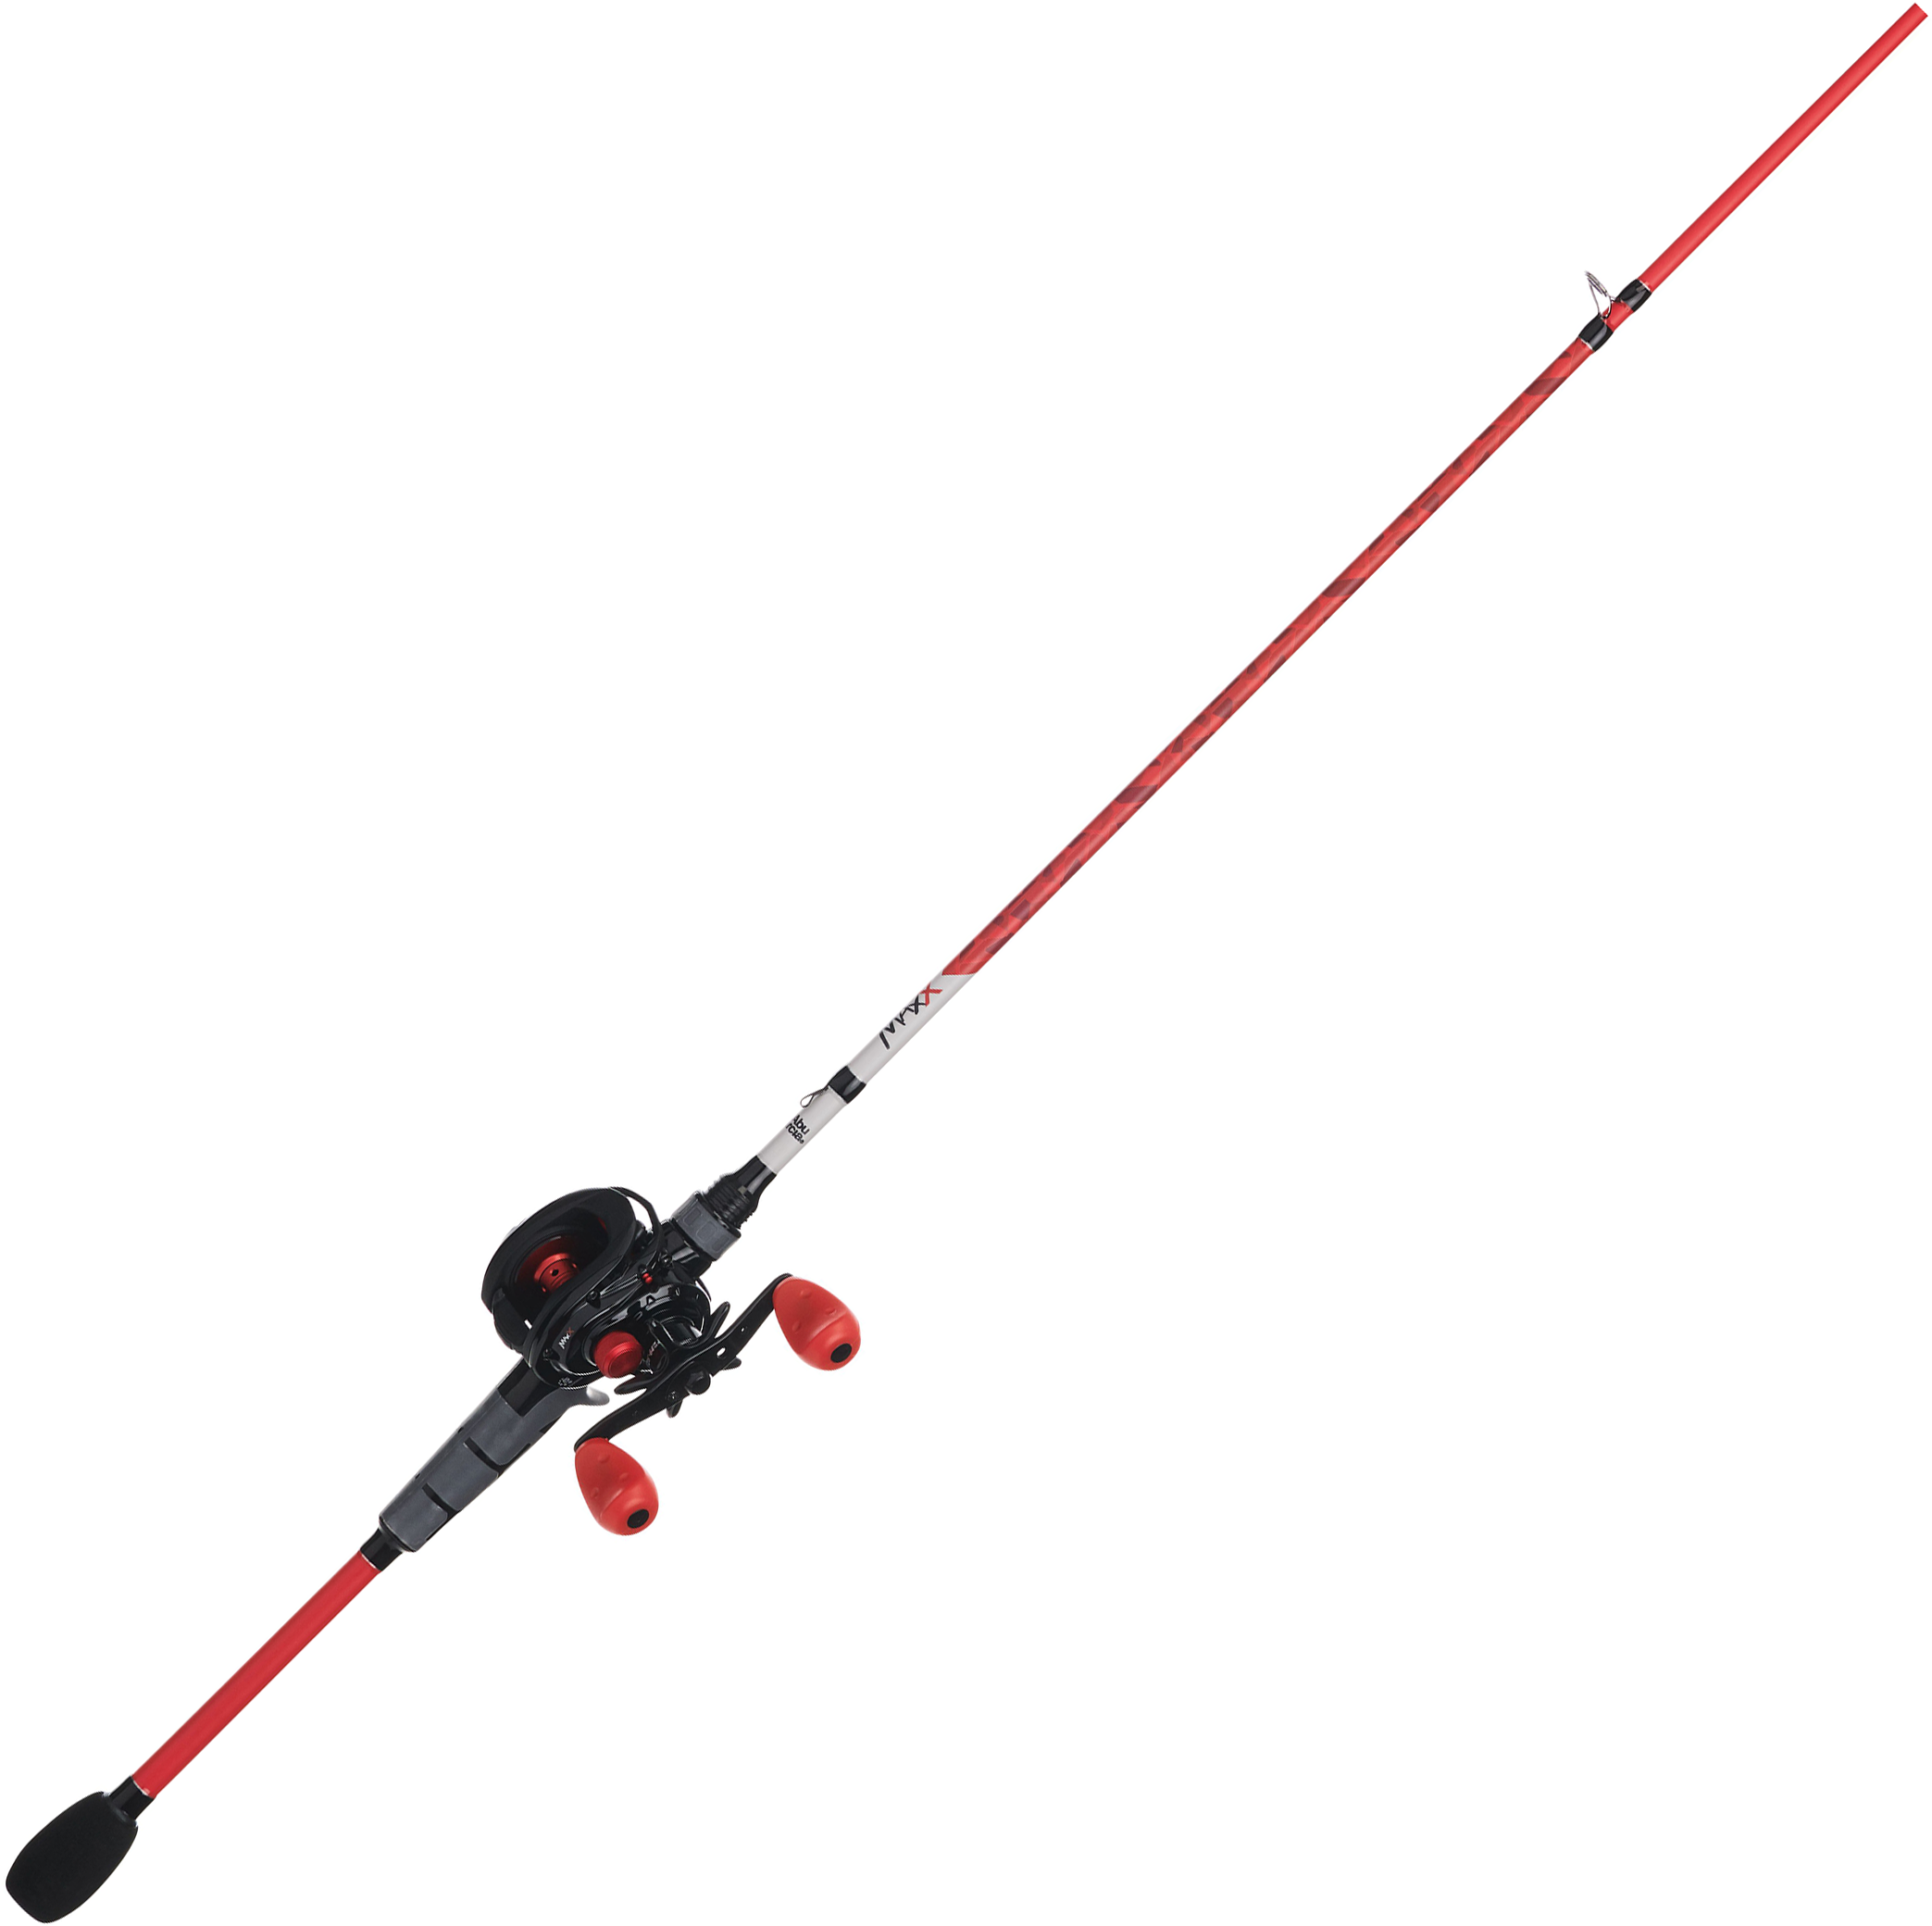 Abu Garcia Pro Max & Max Pro Low Profile Baitcast Reel and Fishing Rod Combo